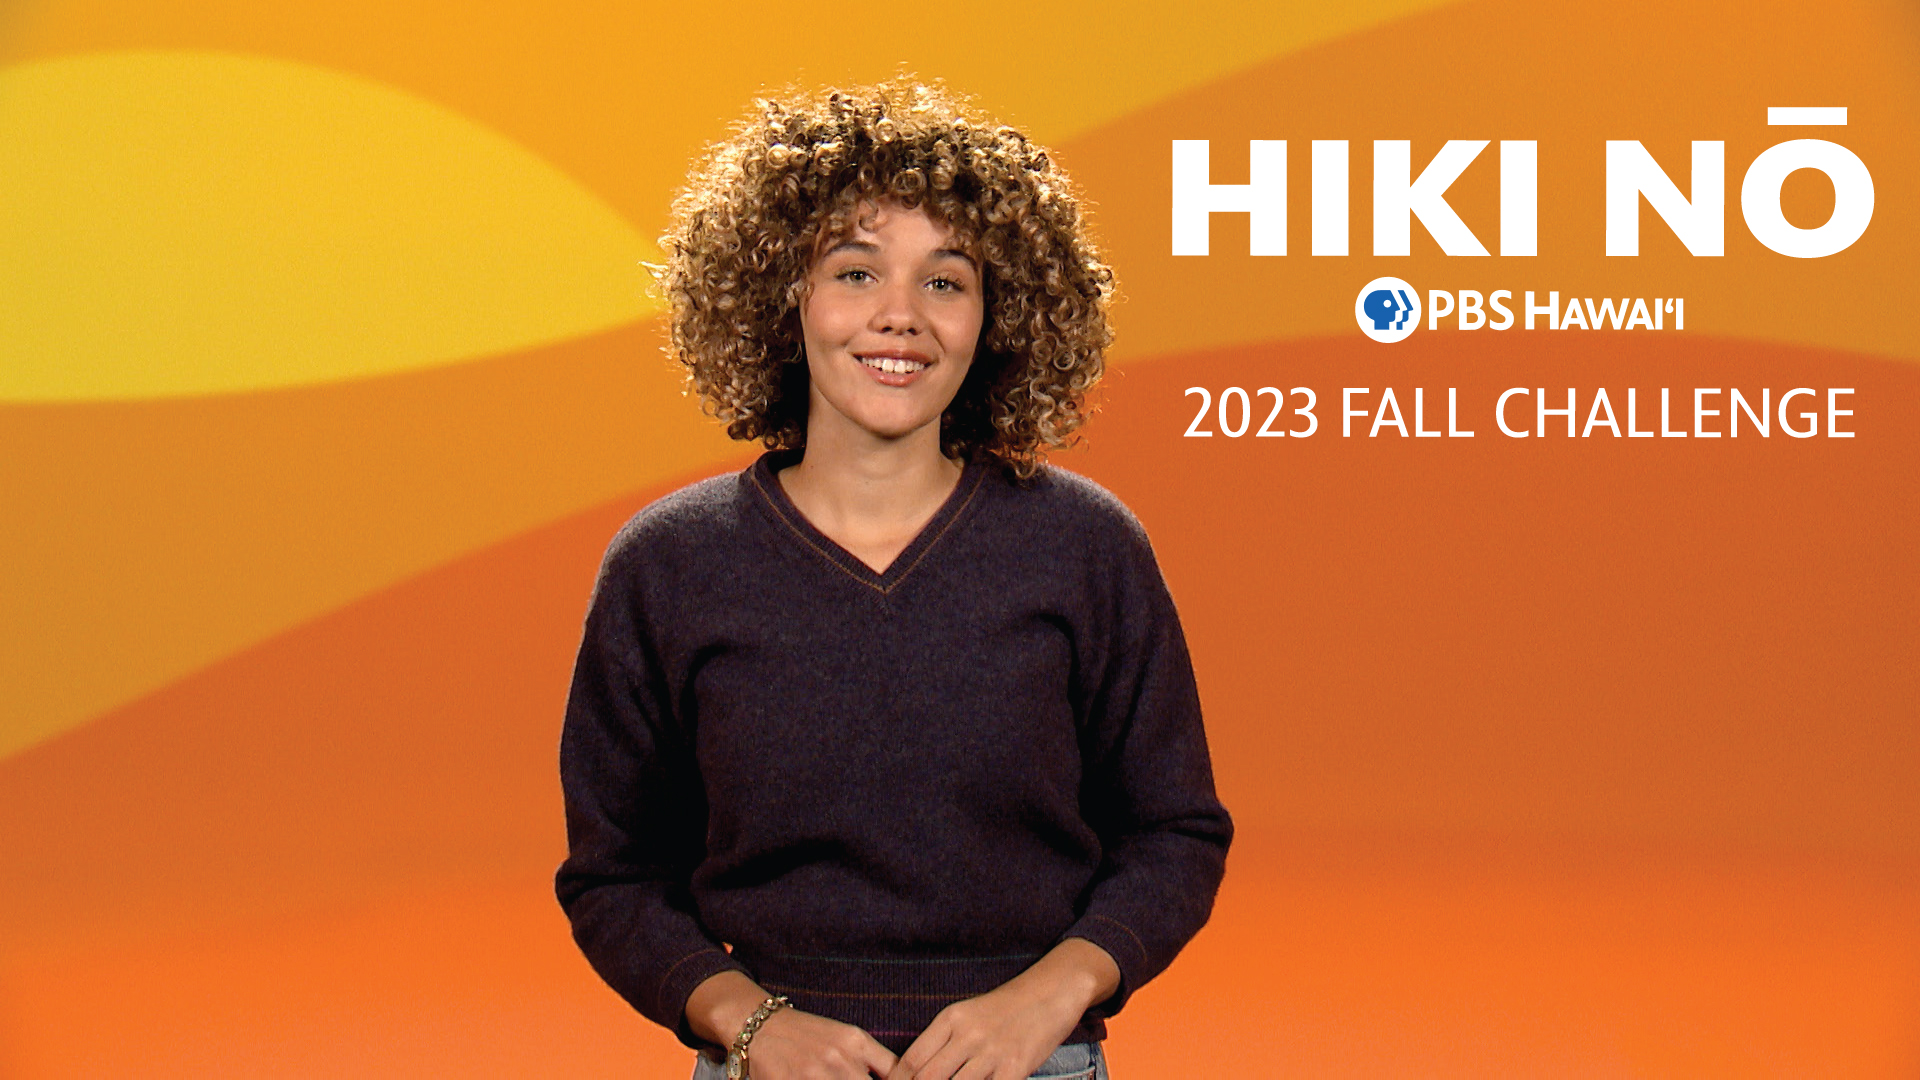 HIKI NŌ ON PBS HAWAIʻI: <br/>2023 Fall Challenge